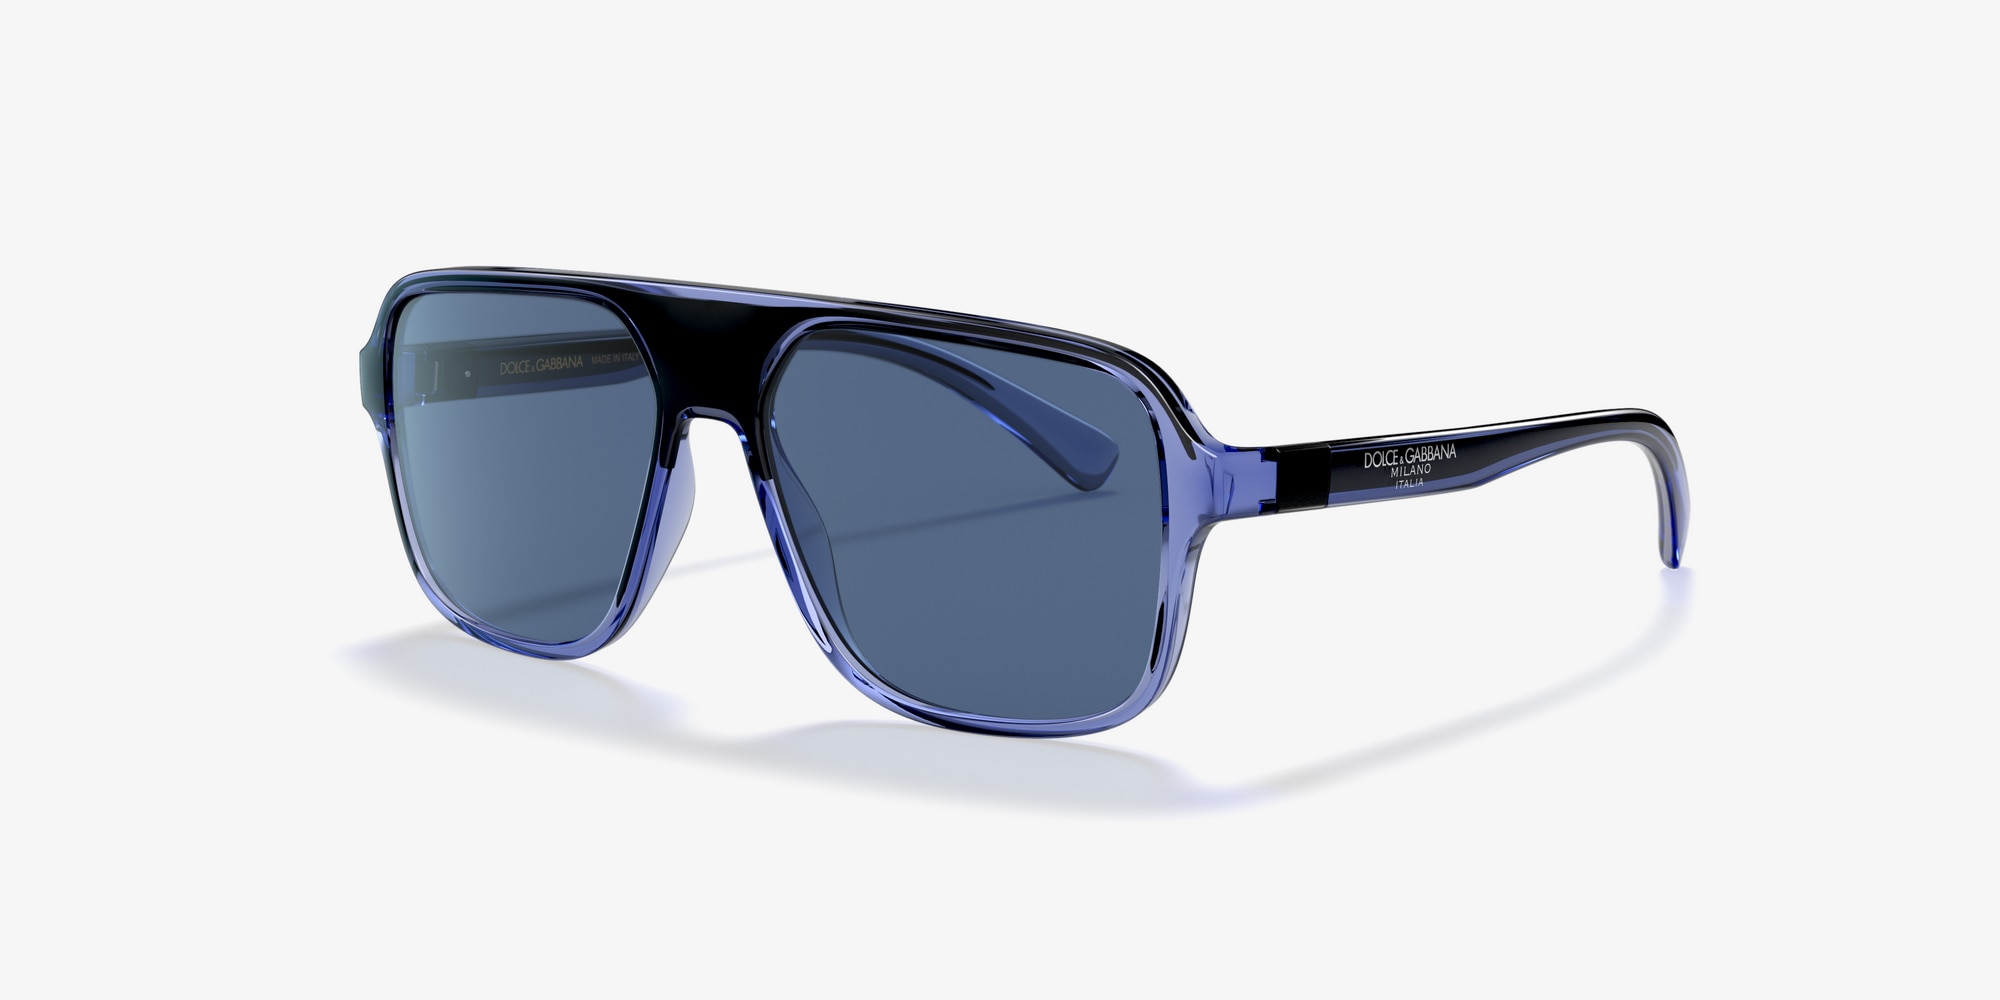 dolce gabbana blue sunglasses